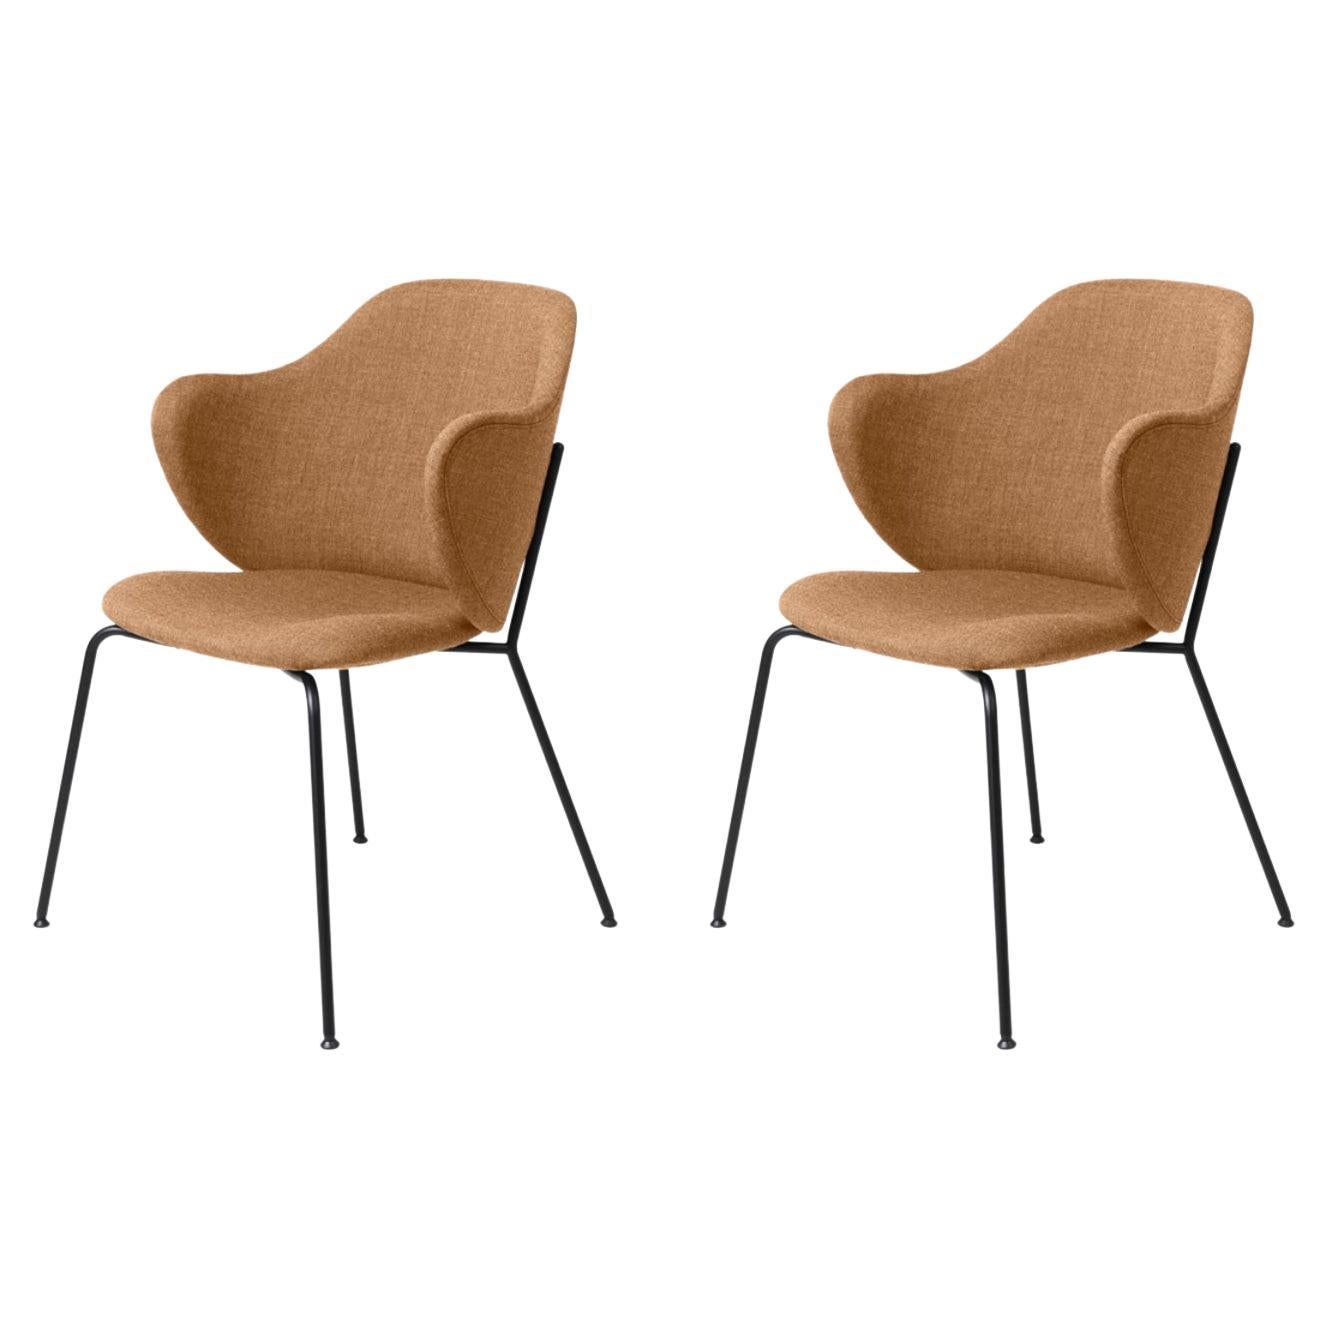 Set of 2 Brown Remix Lassen Chairs by Lassen